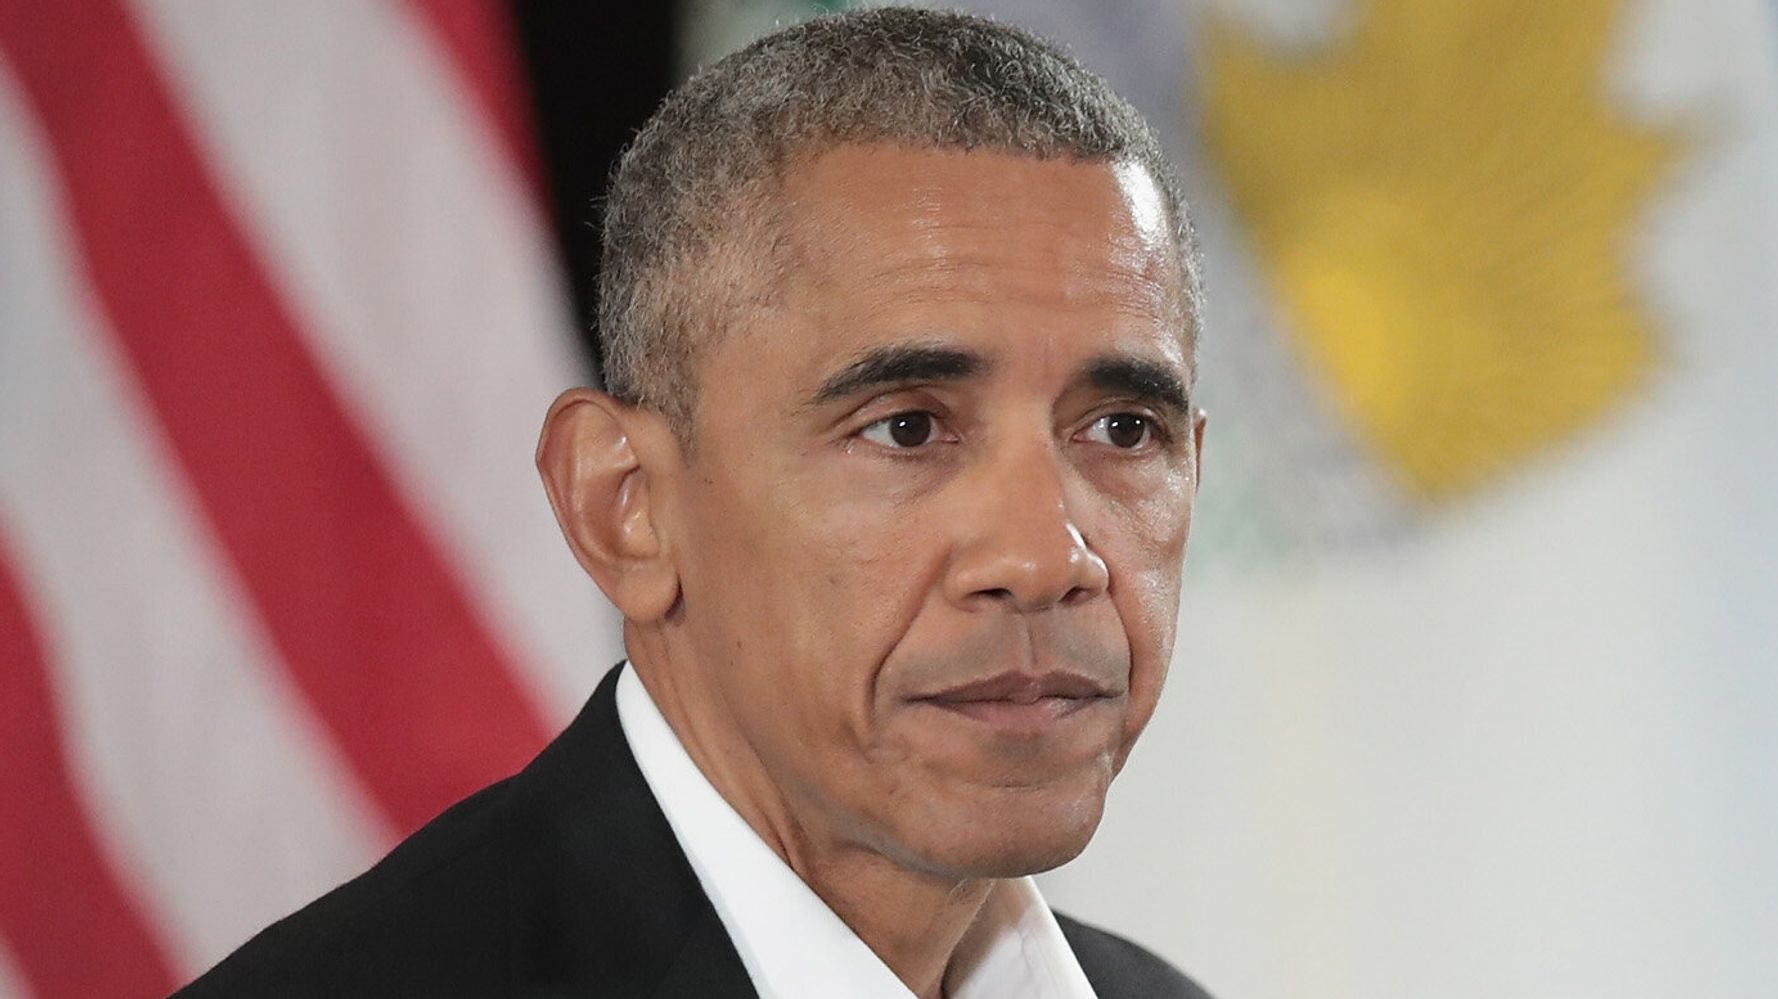 Barack Obama Scales Back Massive 60th Birthday Bash Due To Delta Variant